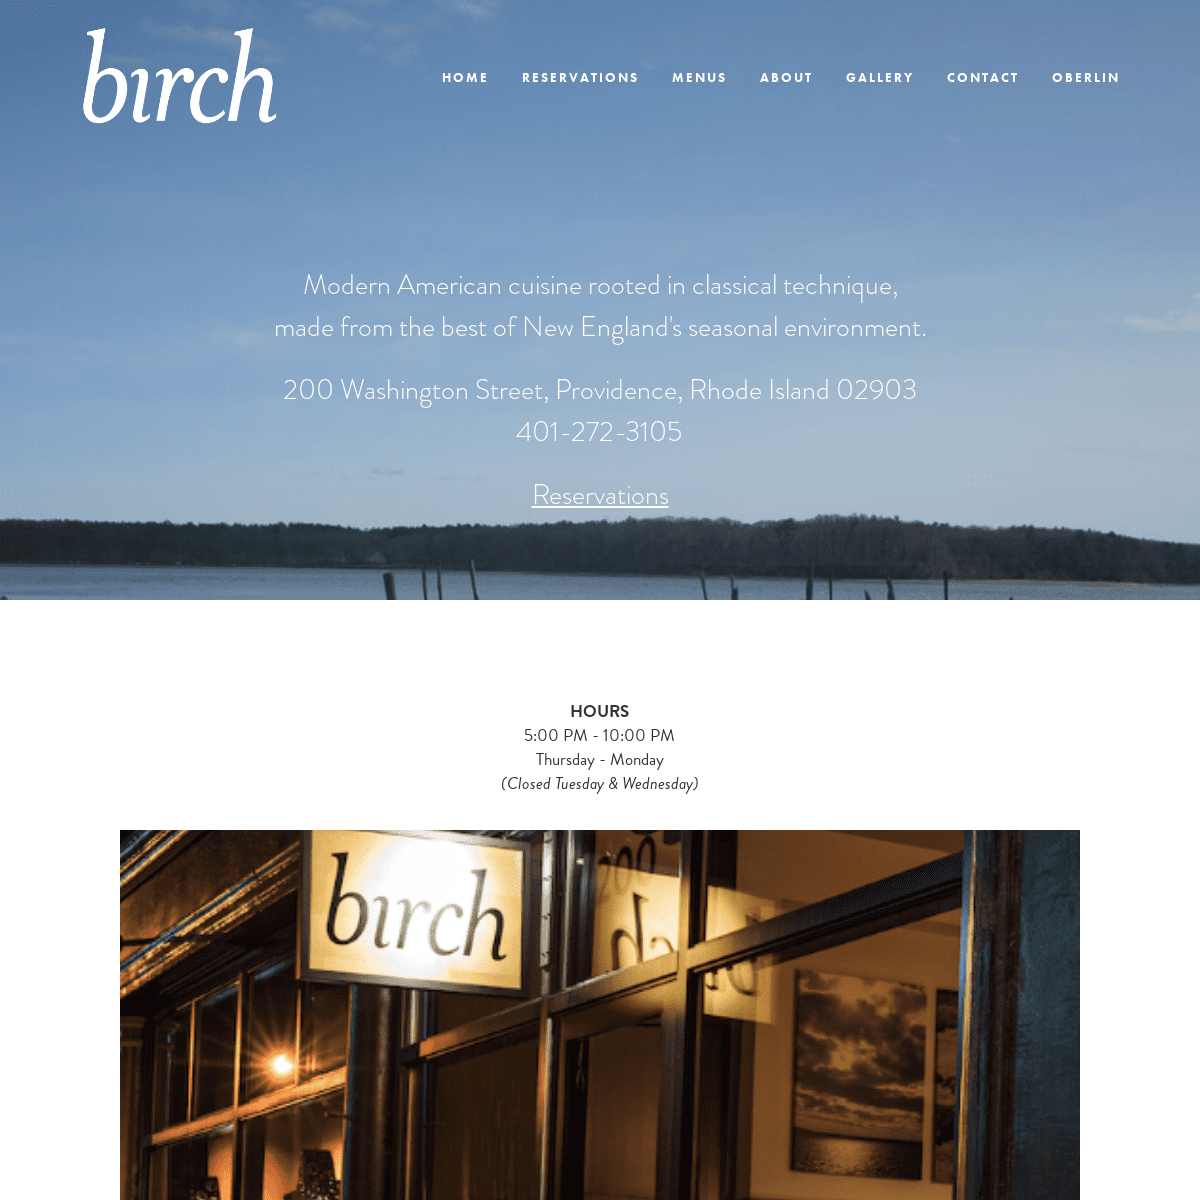 A complete backup of birchrestaurant.com